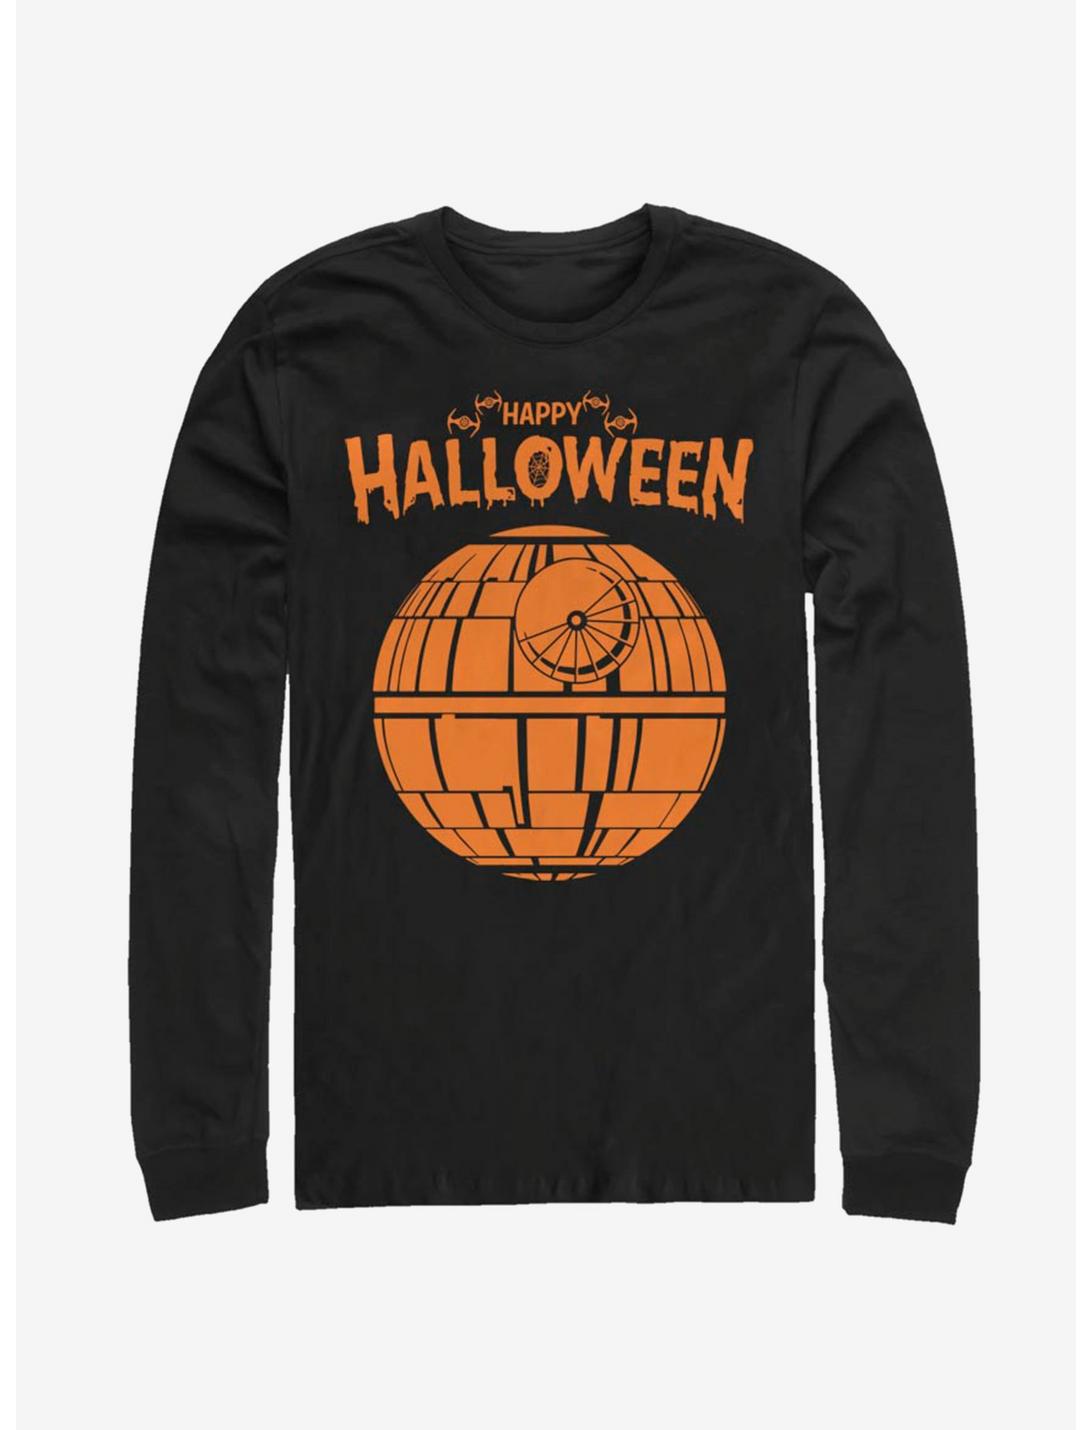 Star Wars Happy Death Star Long-Sleeve T-Shirt, BLACK, hi-res